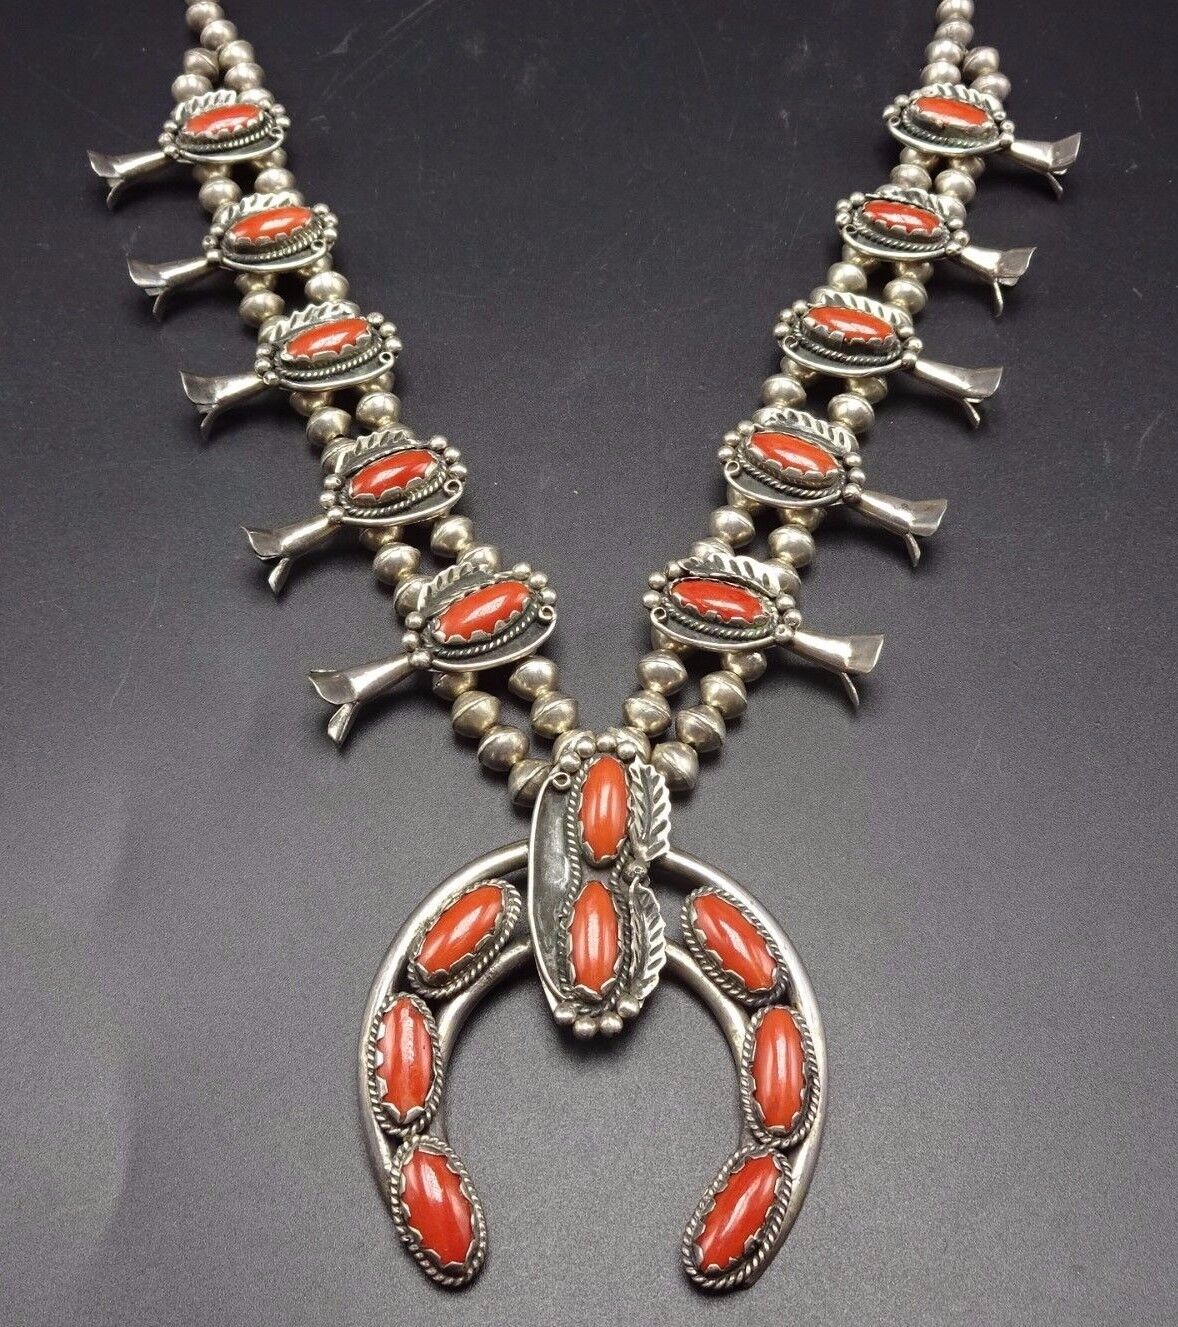 Superb Vintage Sterling Silver and OLD RED MED Coral SQUASH BLOSSOM Necklace